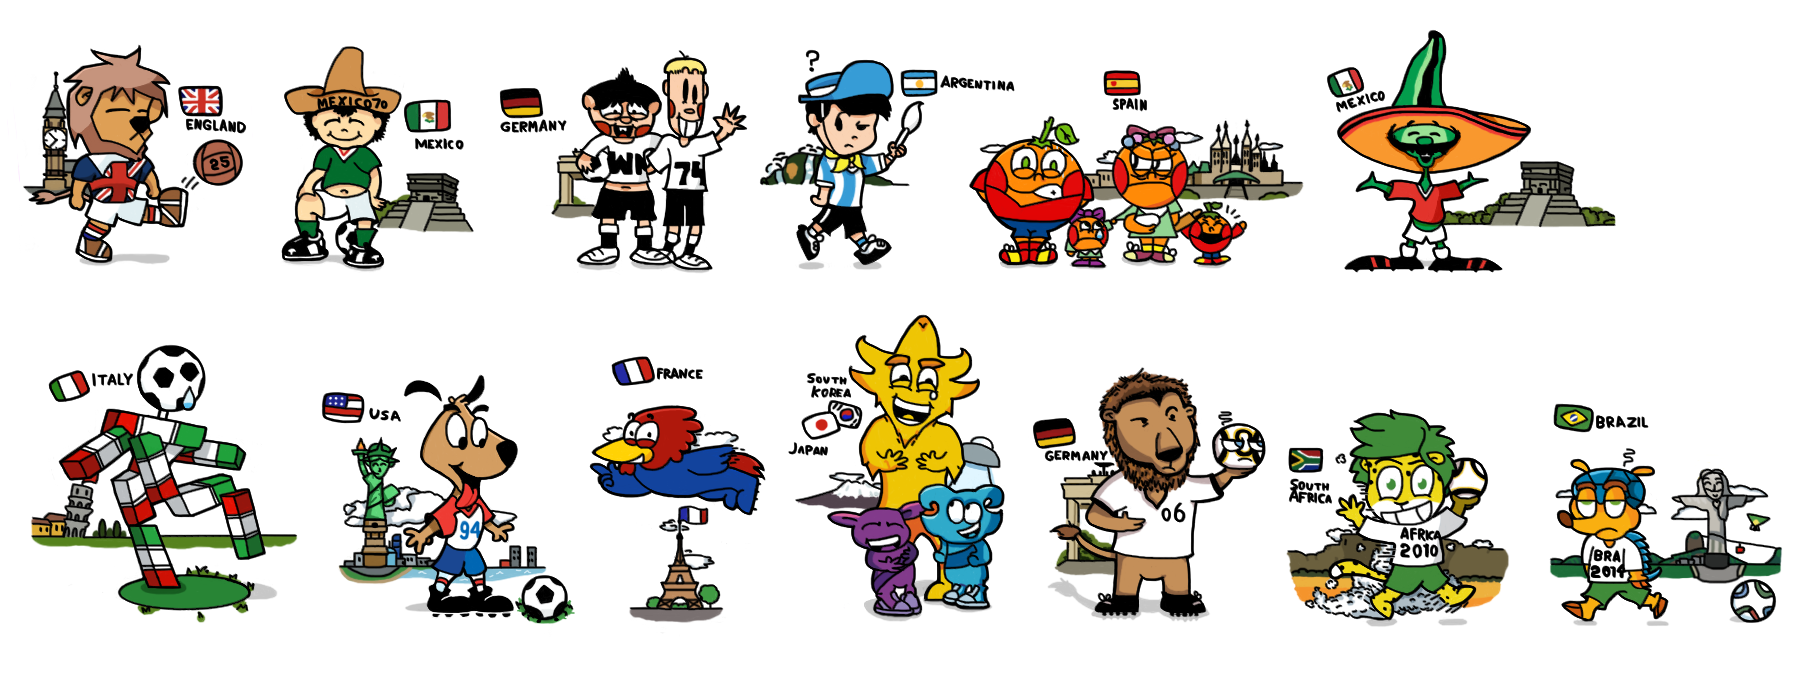 World Cup Mascots Beta Test By Douglasartgallery On Deviantart